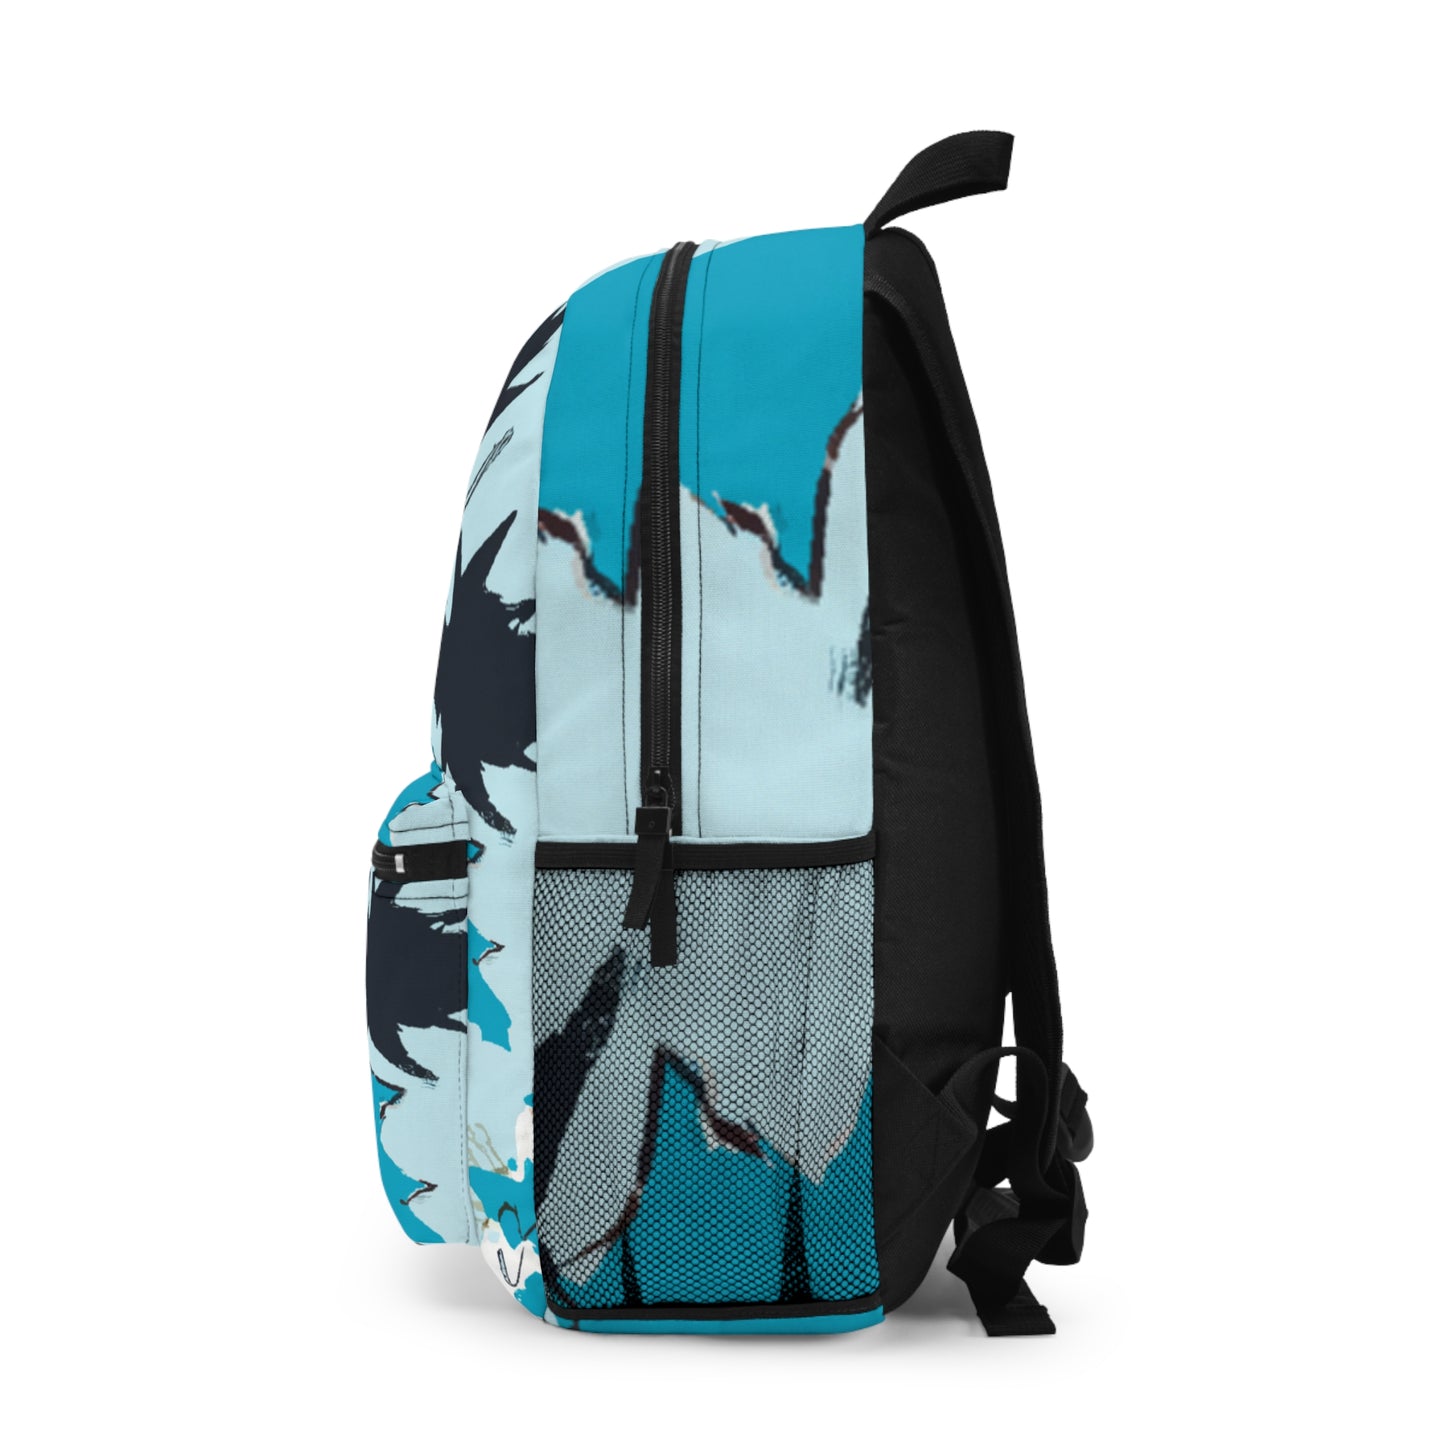 Marcelo Delacroix Backpack